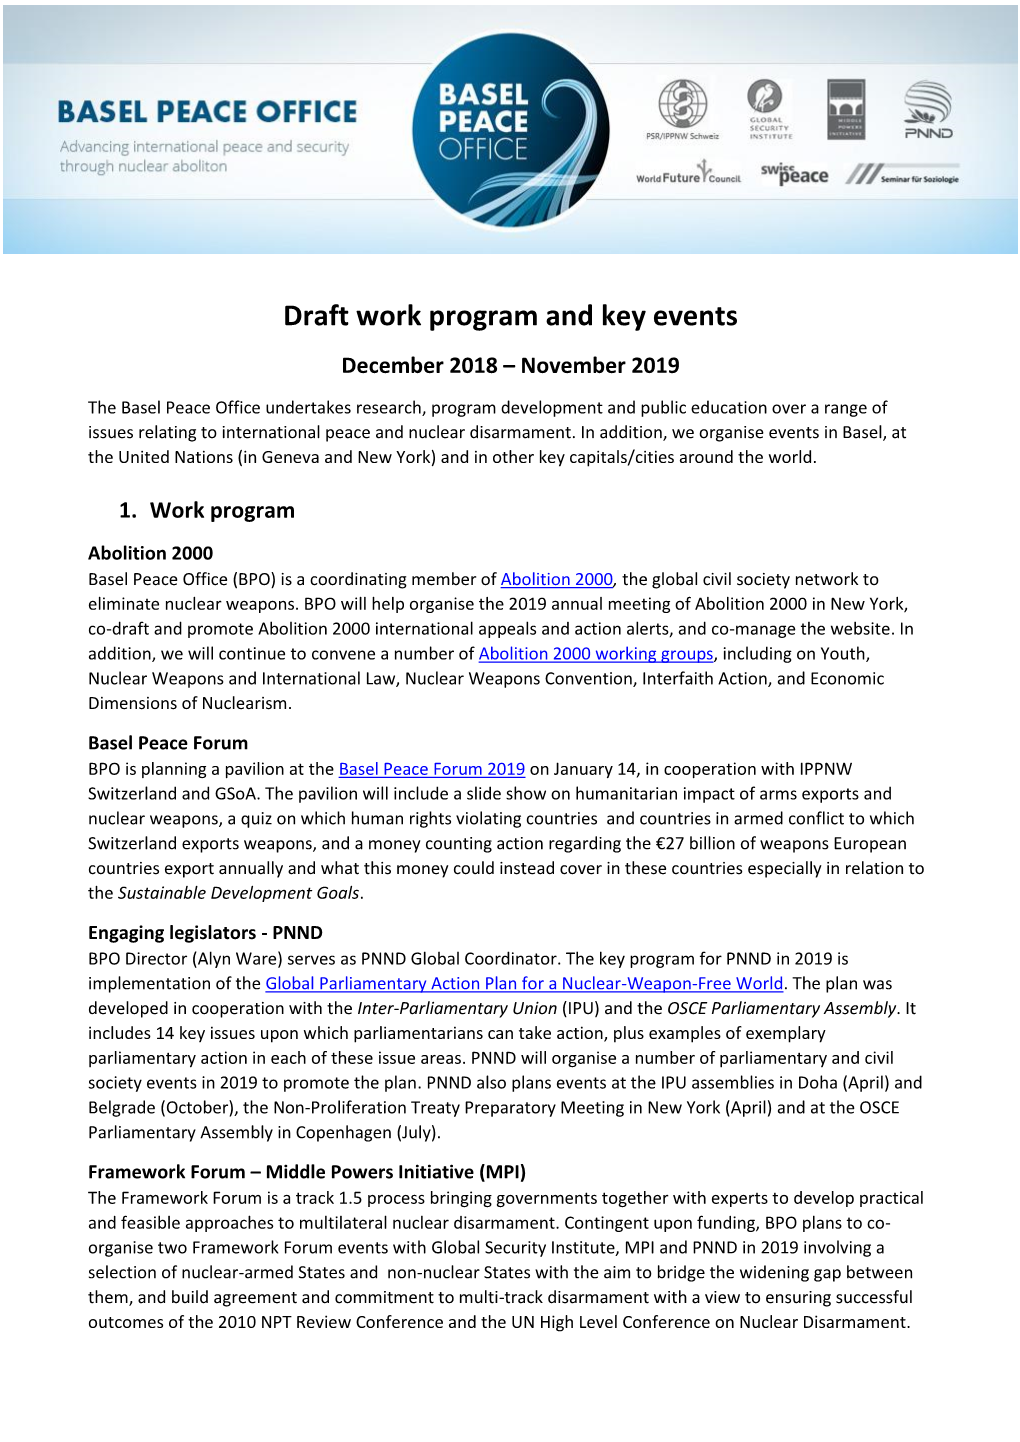 Draft Work Program and Key Events December 2018 – November 2019